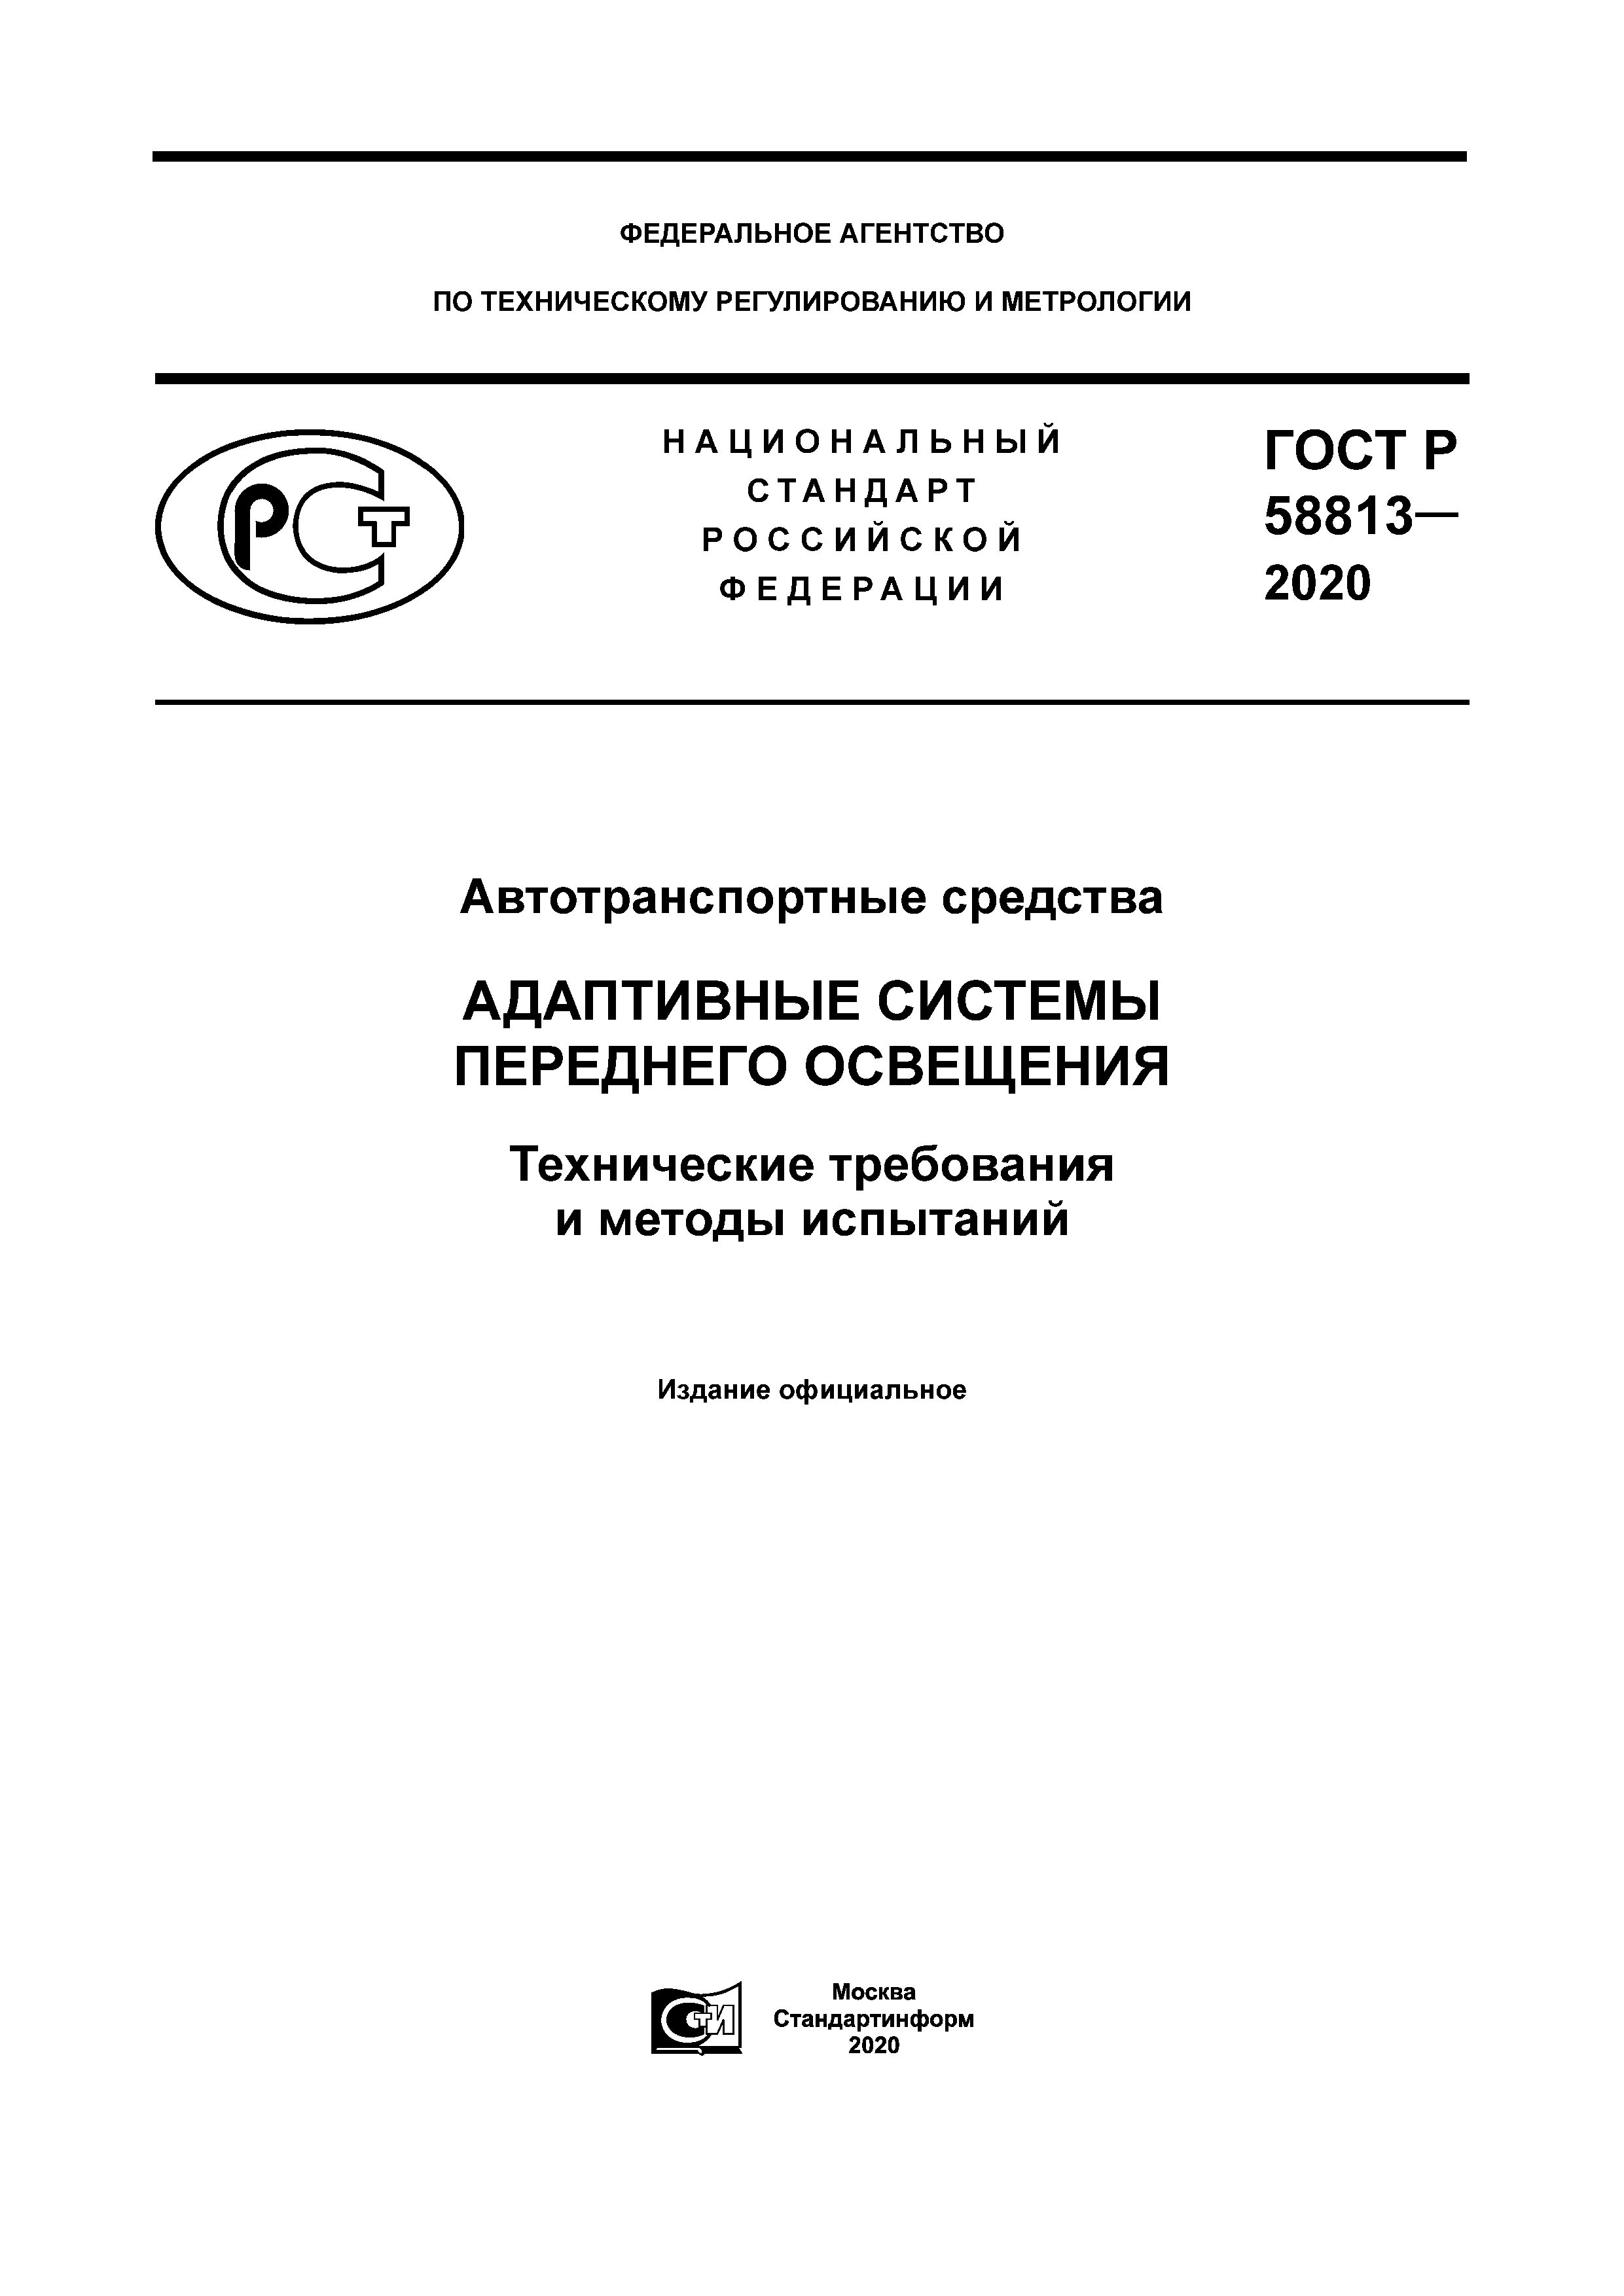 ГОСТ Р 58813-2020